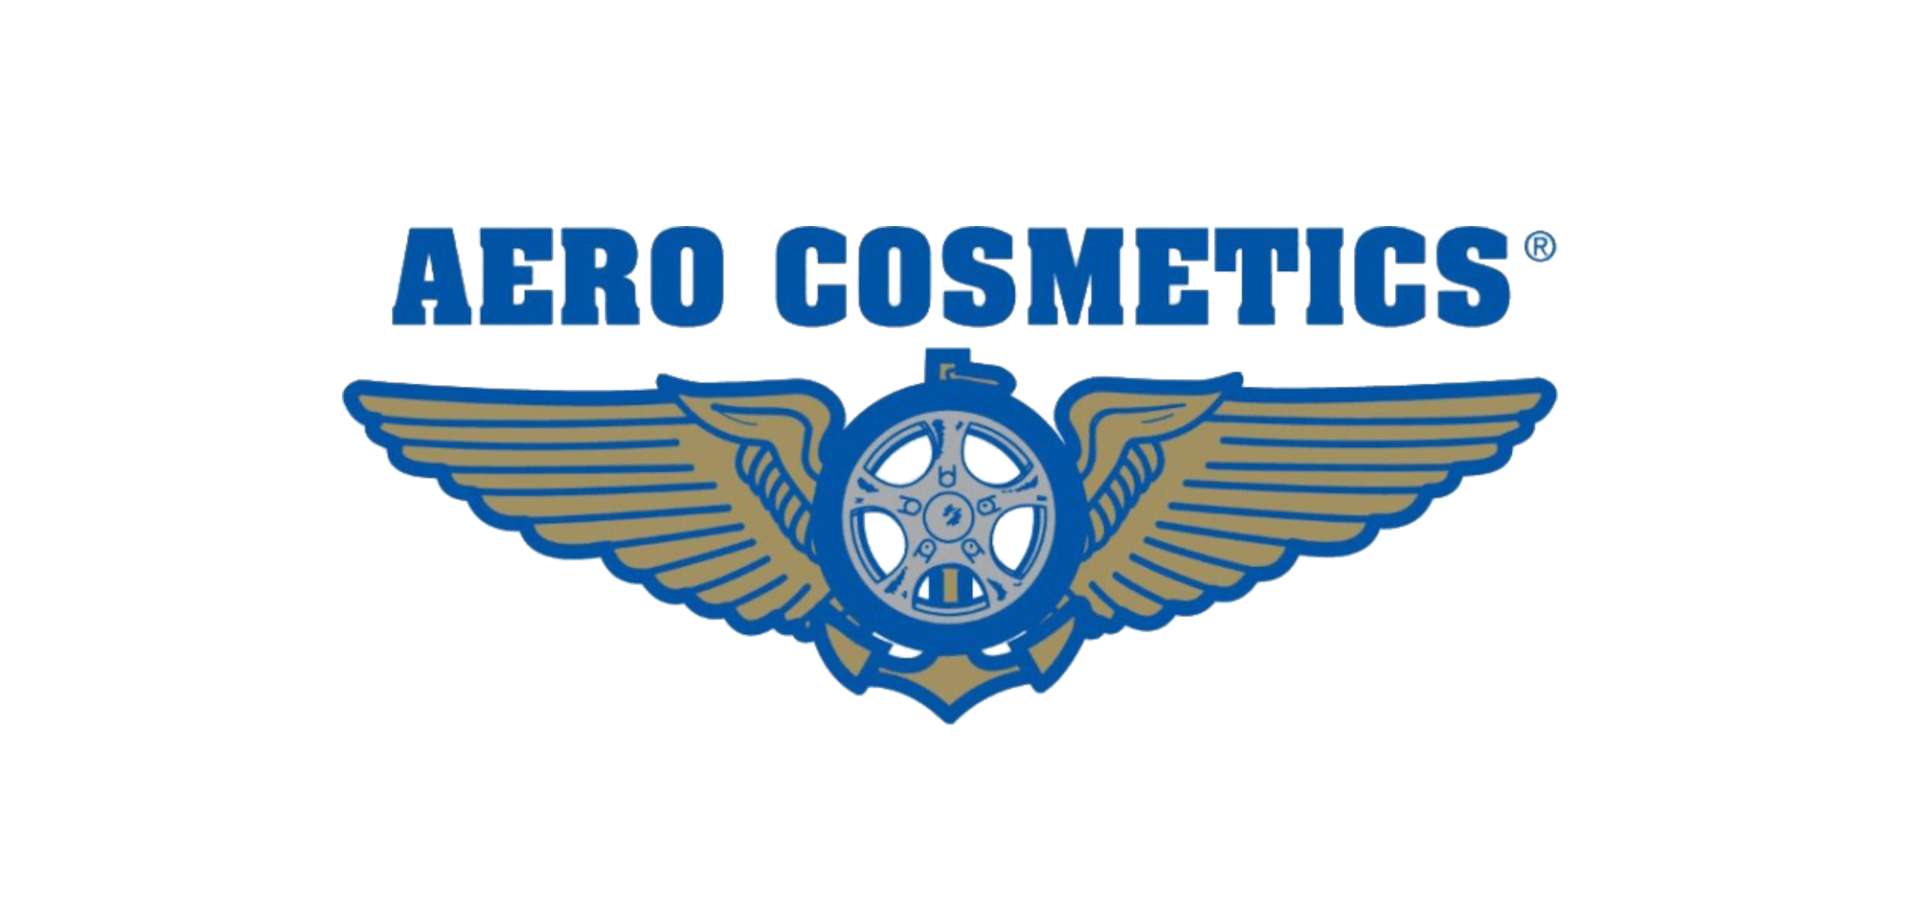 Aero Cosmetics Logo